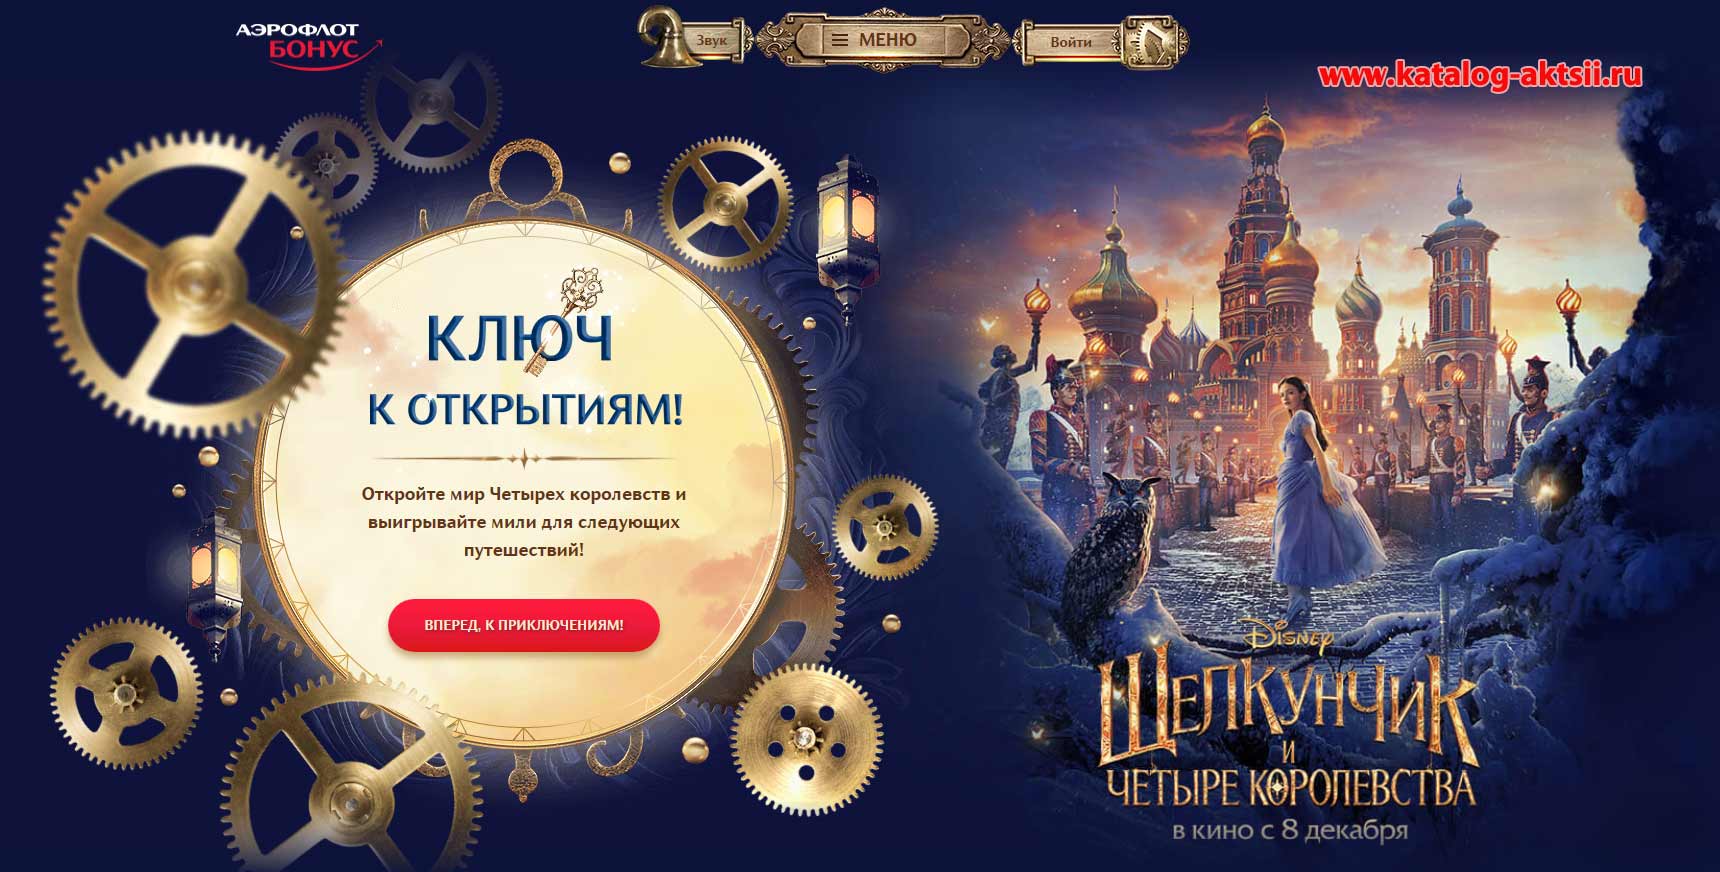 magic.aeroflot.ru регистрация